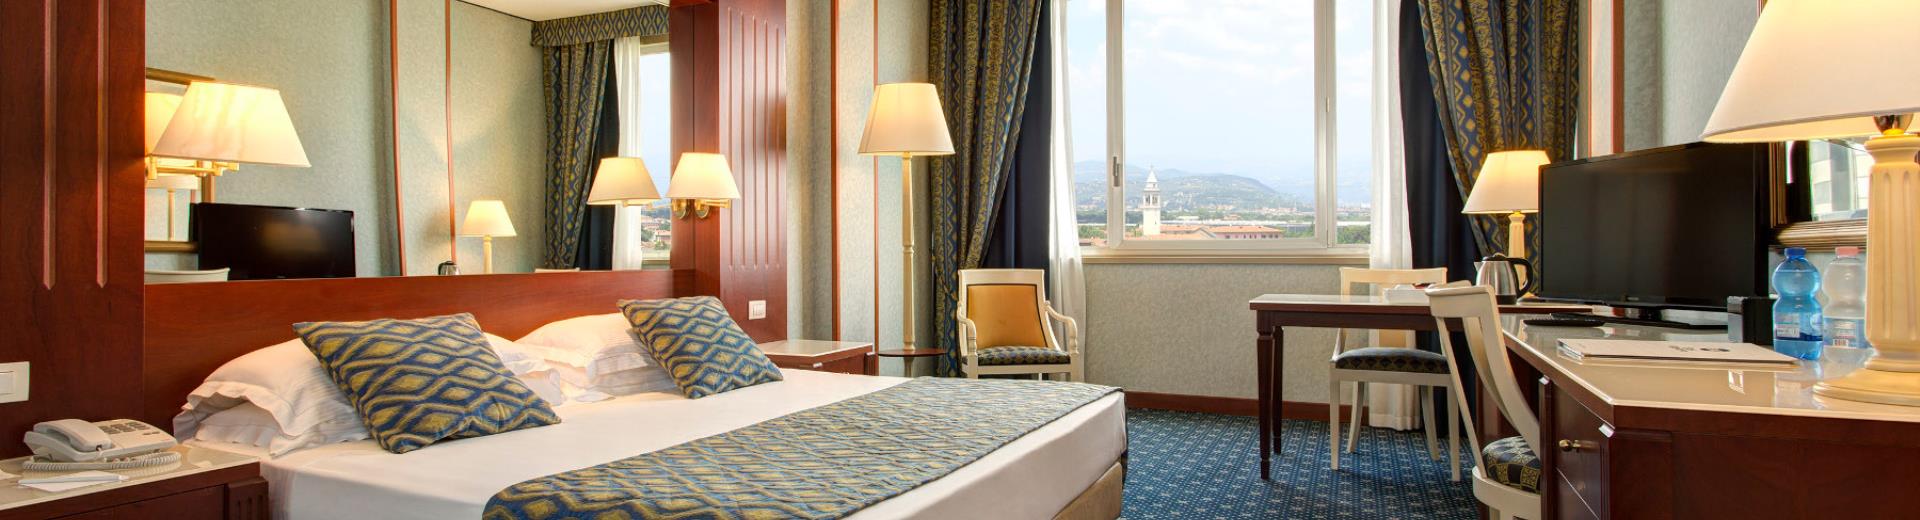 Classic Double Room - CTC Hotel Verona 4 star